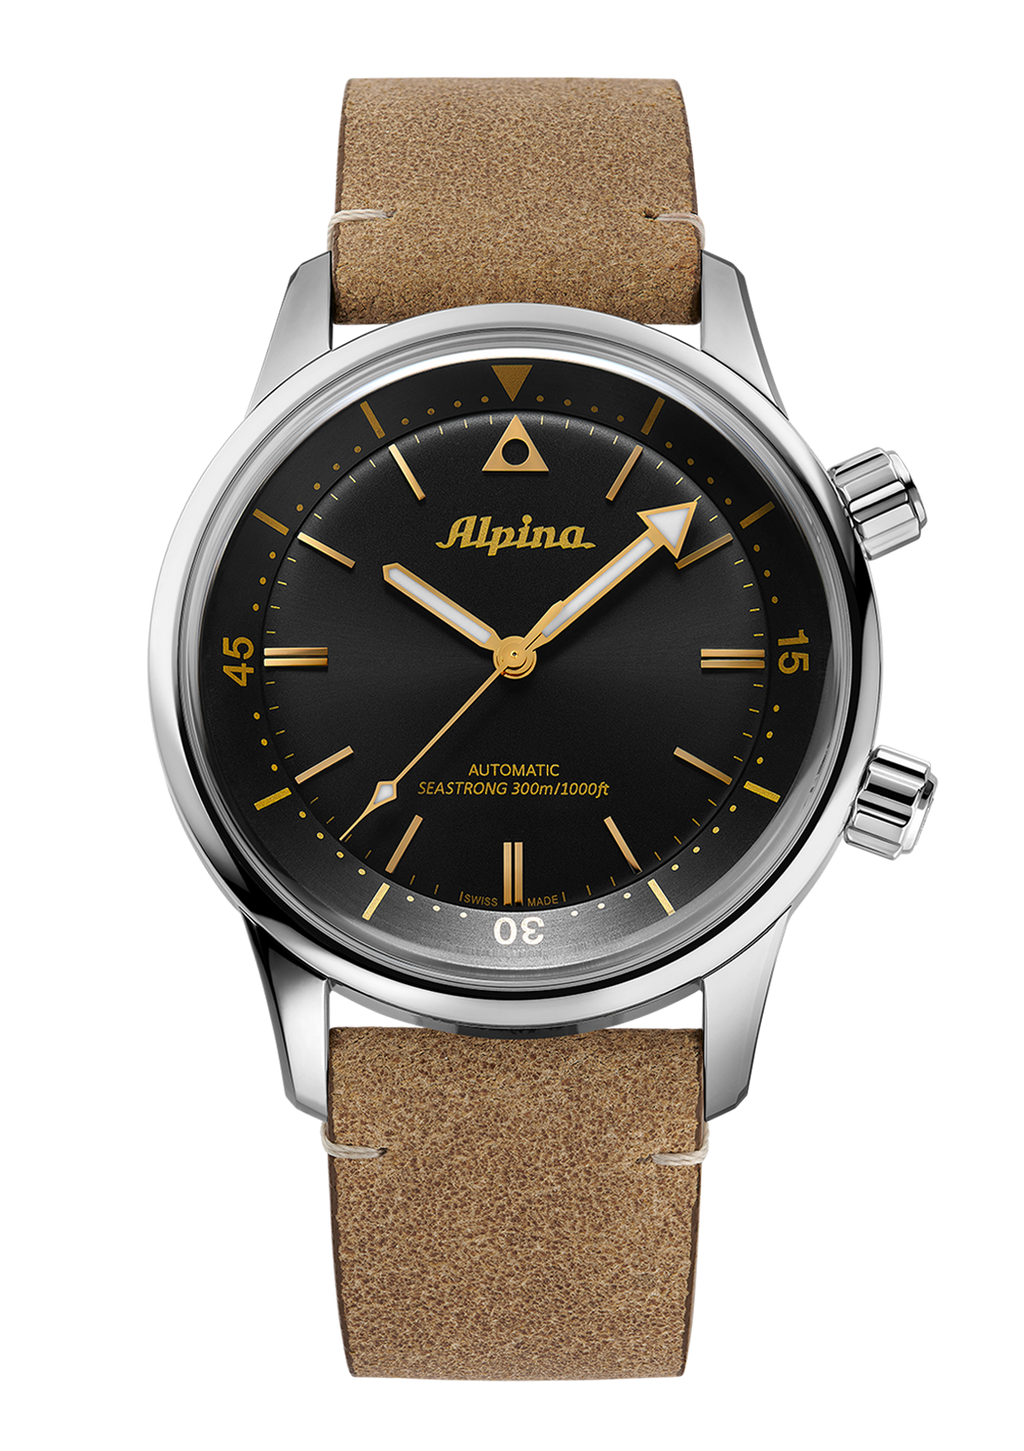 alpinawatches.com